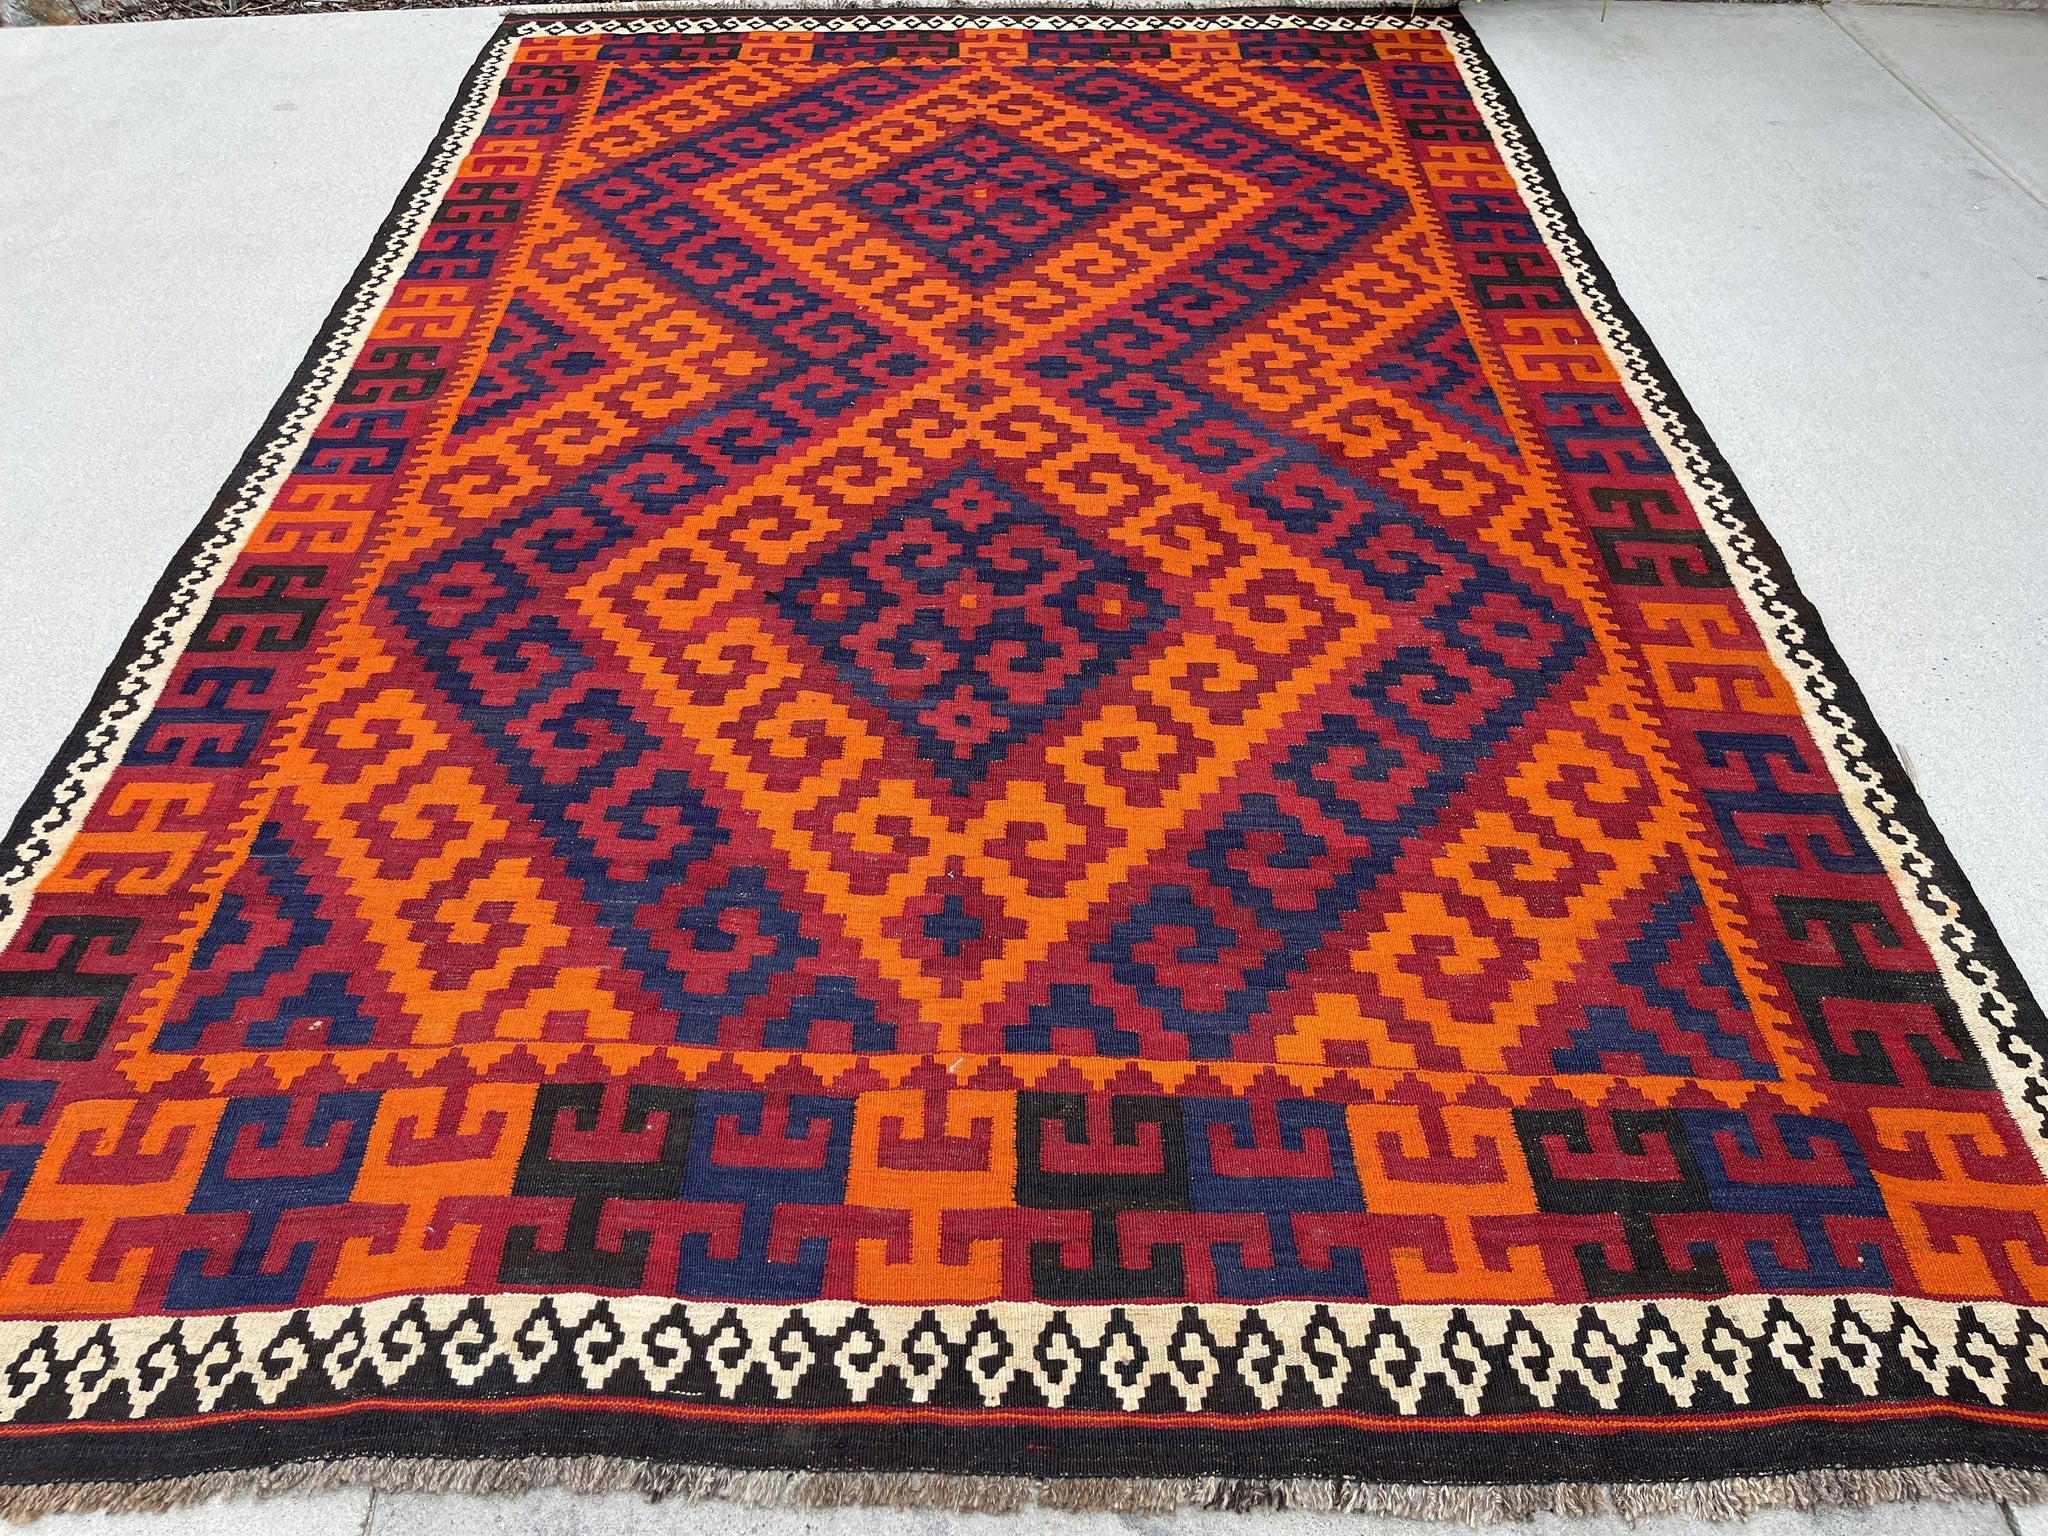 7x11 (210x322) Vintage Kilim Flatweave Afghan Rug | Red White Blue Black Orange| Bohemian Outdoor Tribal Turkish Moroccan